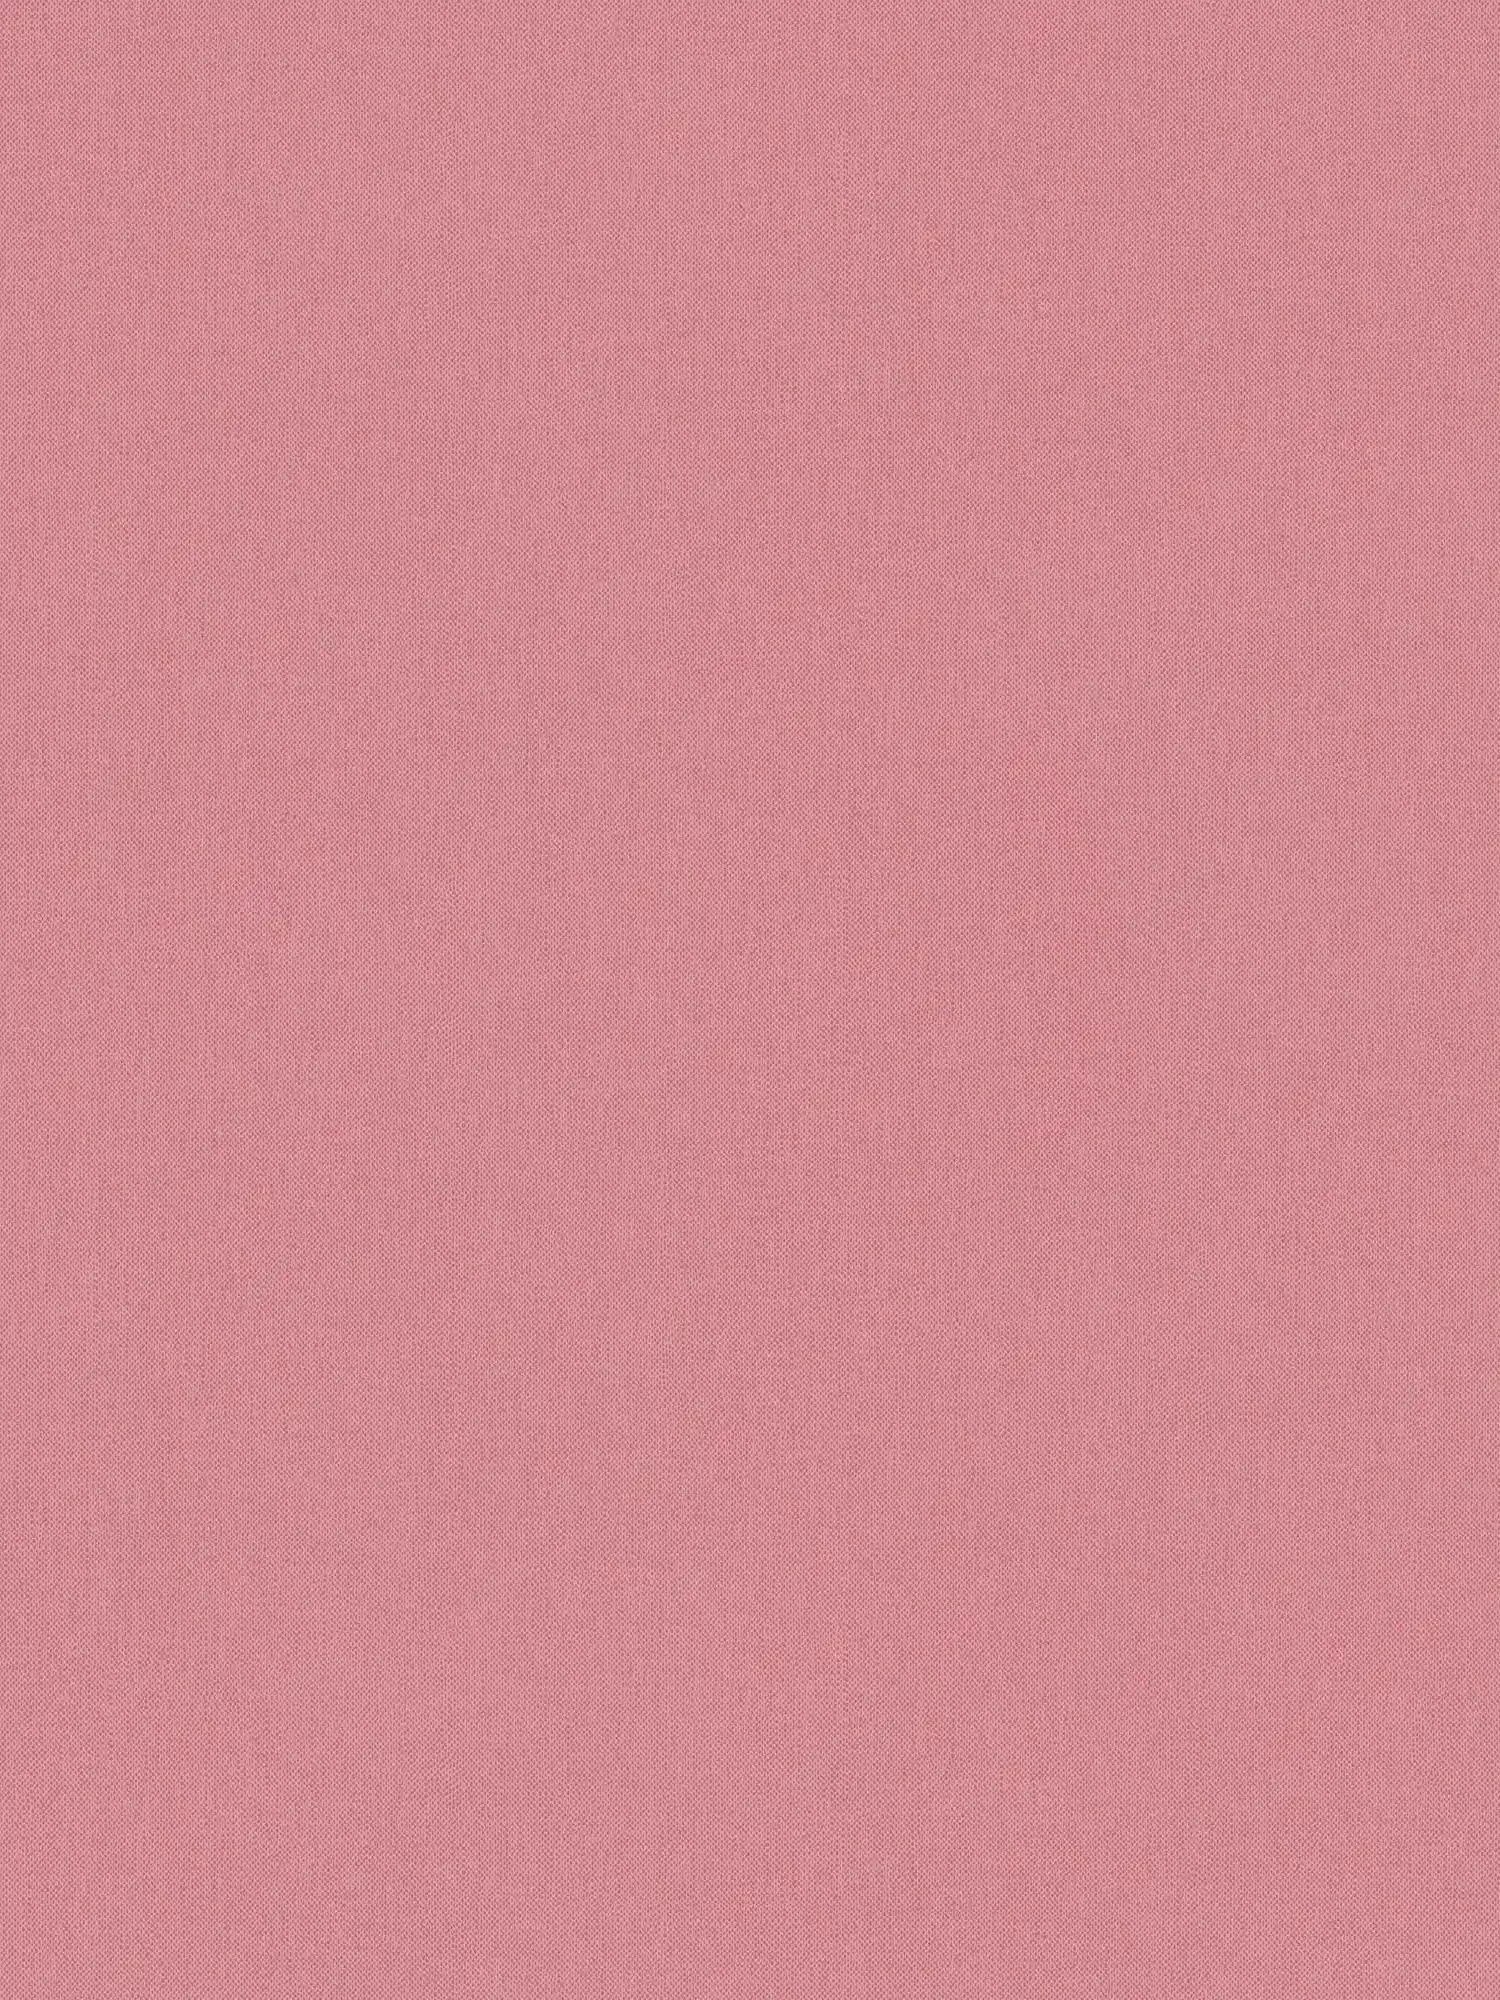 Carta da parati rosa antico uni, superficie opaca e struttura tessile - rosa
